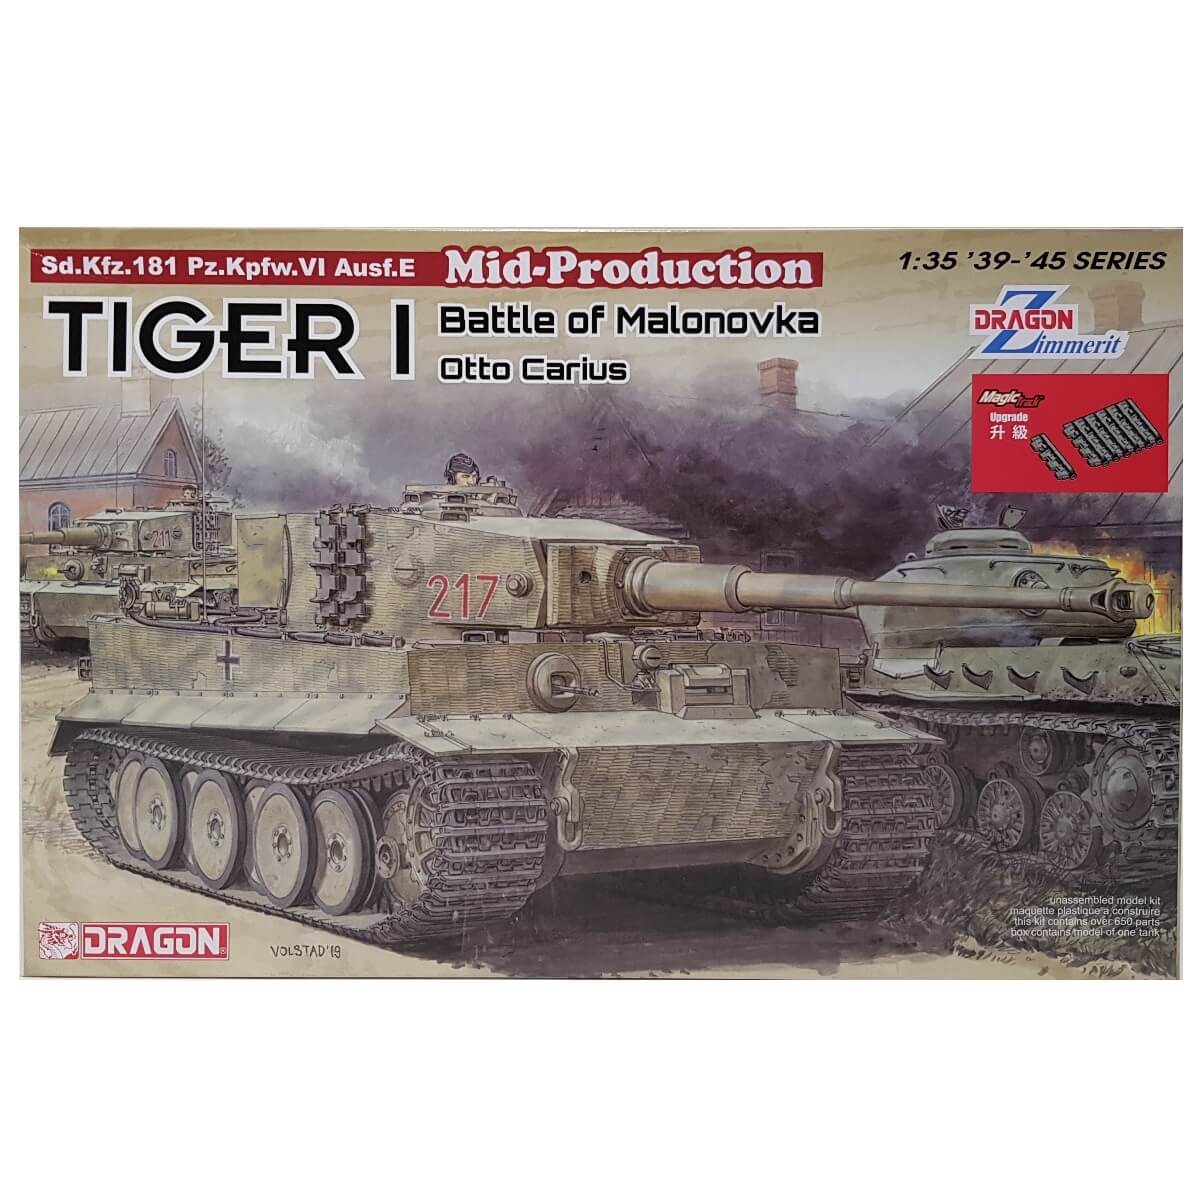 1:35 Tiger I Mid-Production Battle of Malonovka Otto Carius - DRAGON